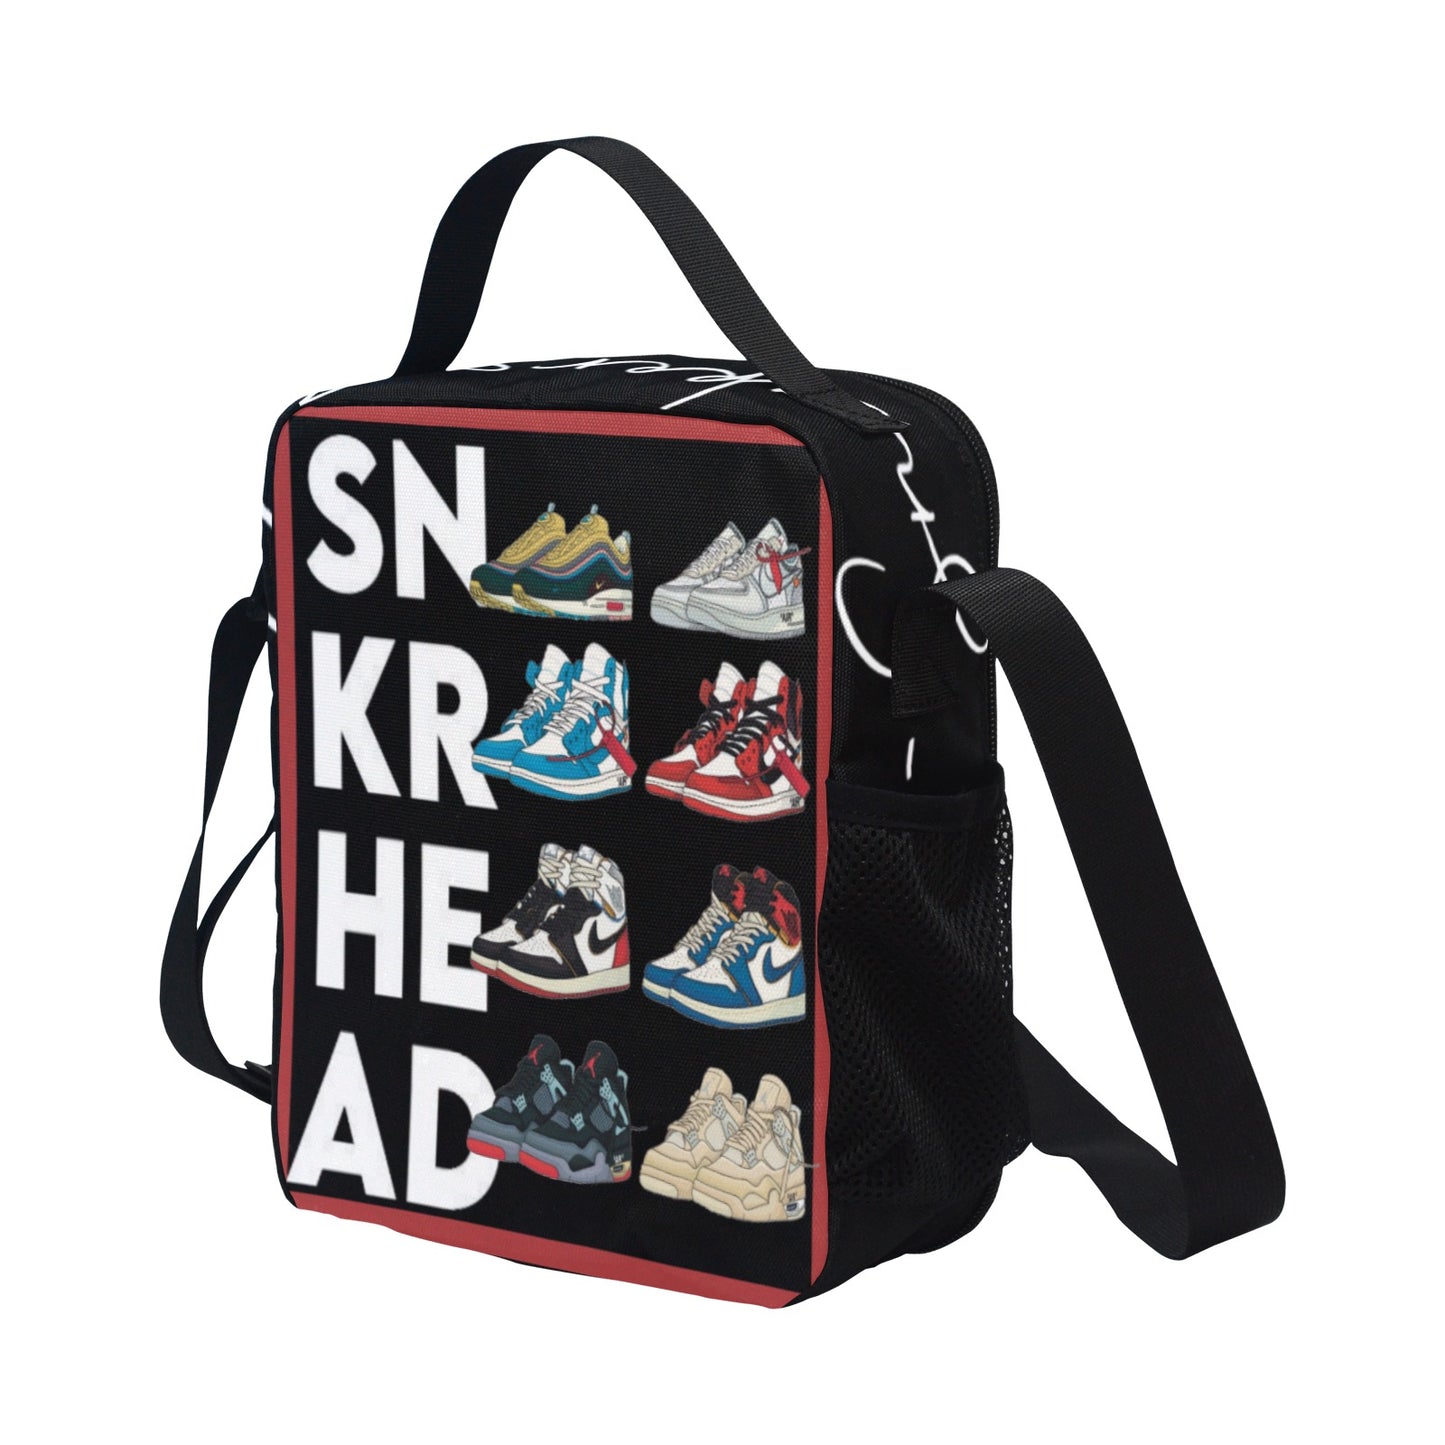 Sneakerhead Kids Crossbody Lunch Bag